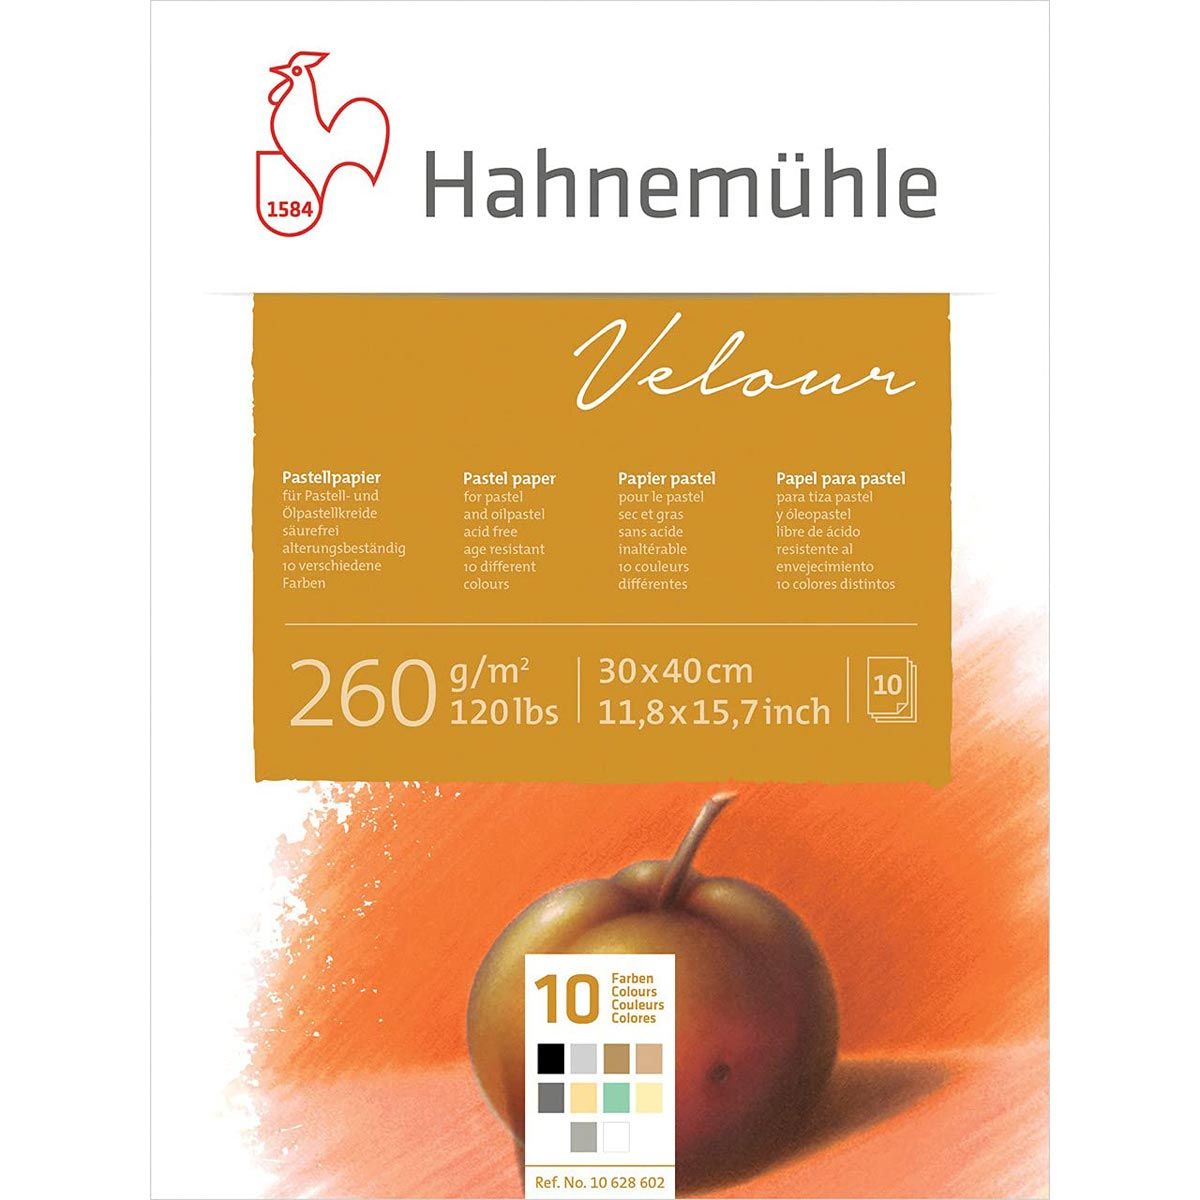 Hahnemühle Velour Pastel Pad (30x40 cm) 11.8 x 15.7 in